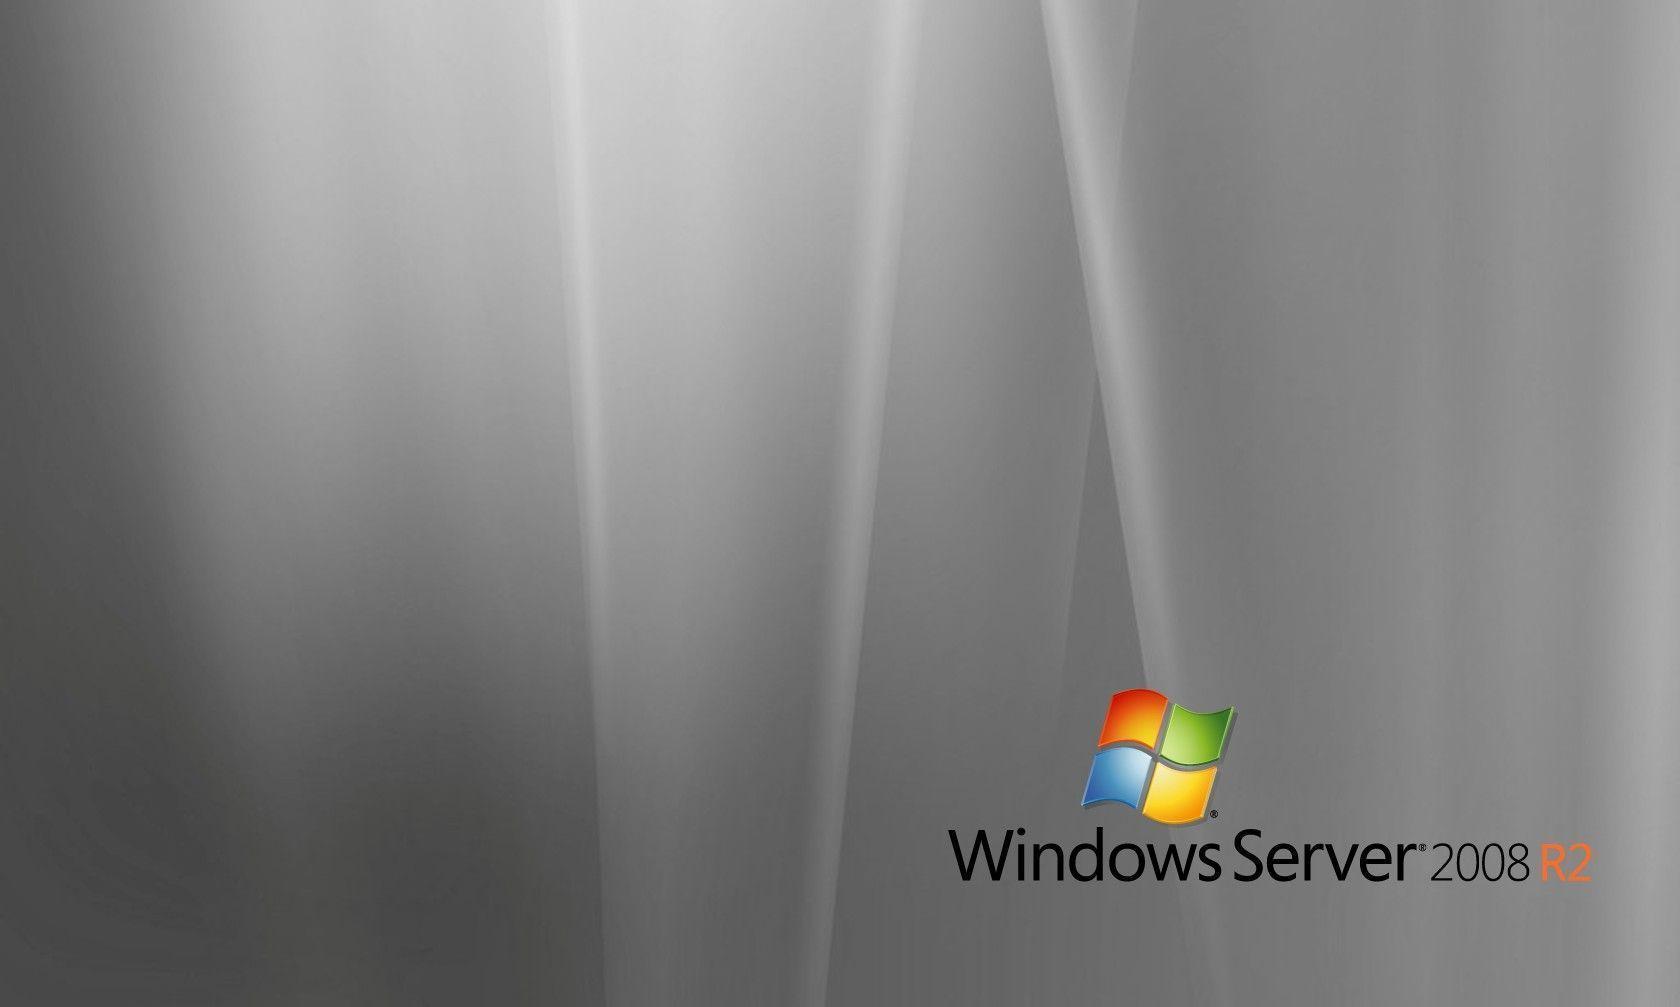 stanley funderburk: Windows Server 2008 R2 Beta